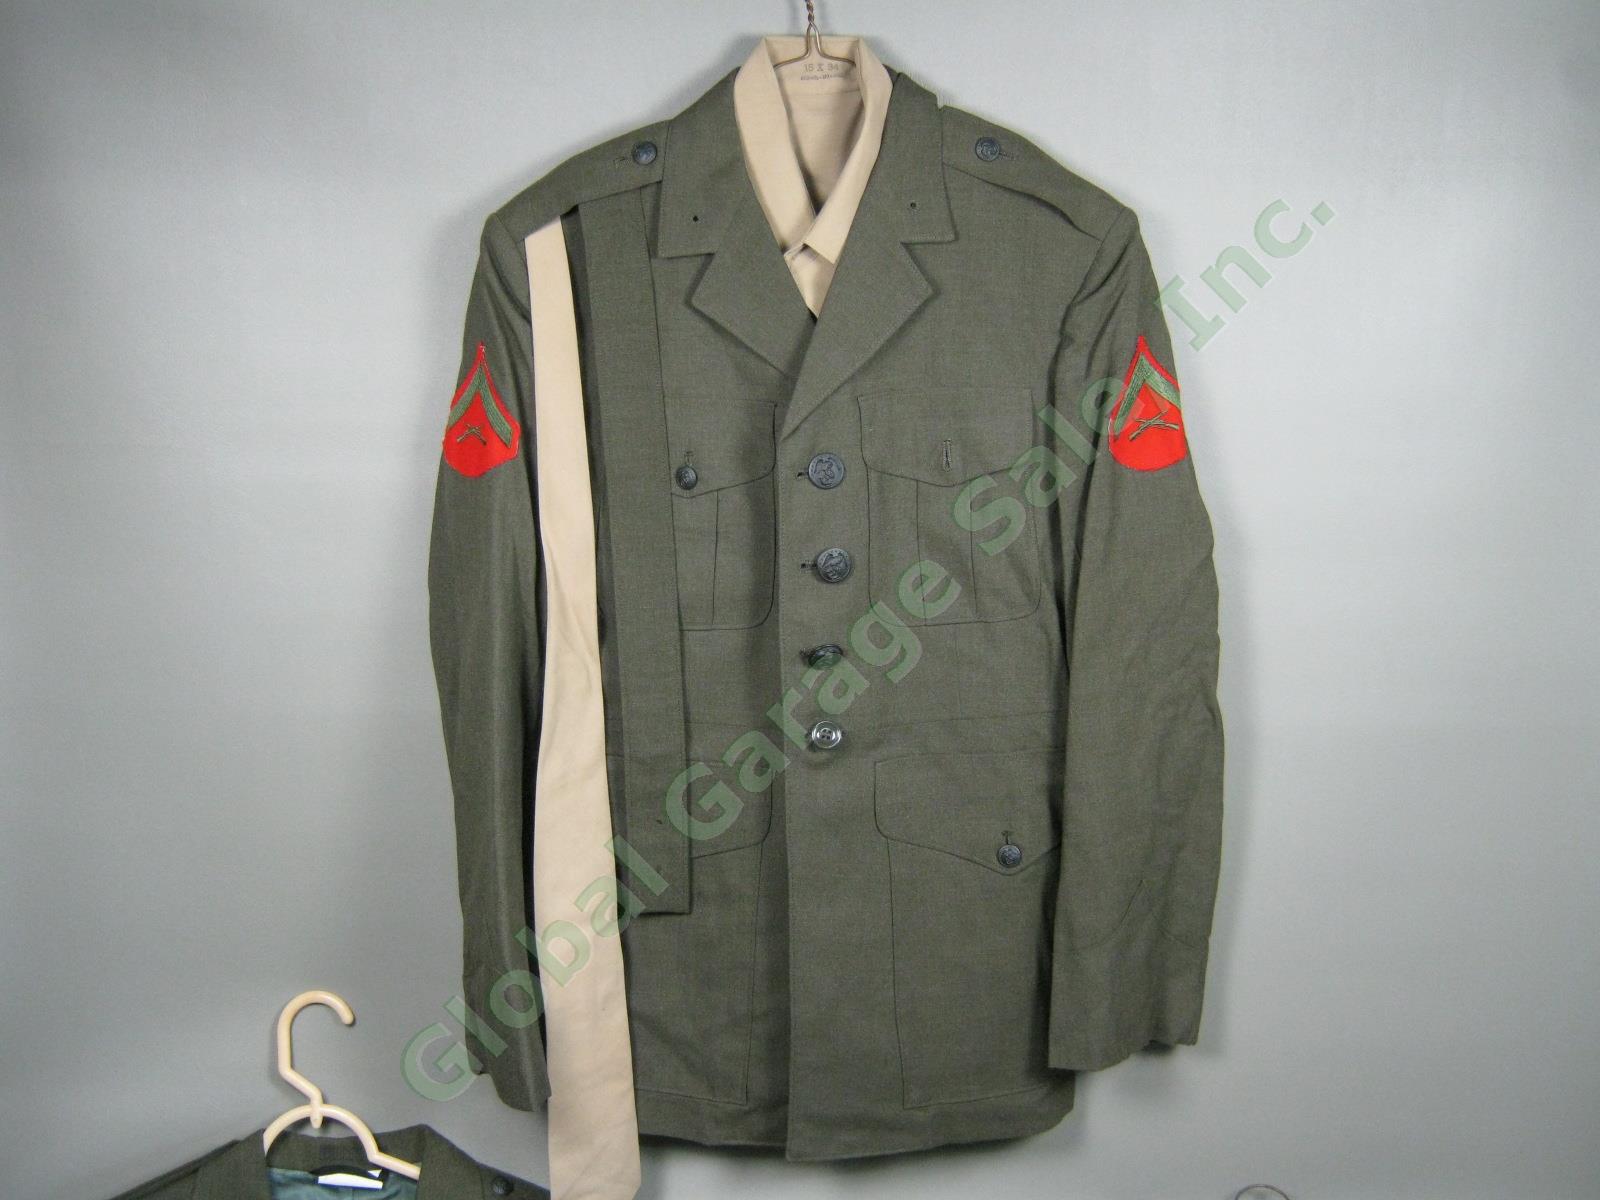 Huge USMC Marine Corps Charlie Uniform Pants Jackets Shirts Cap Lot Never Worn! 1